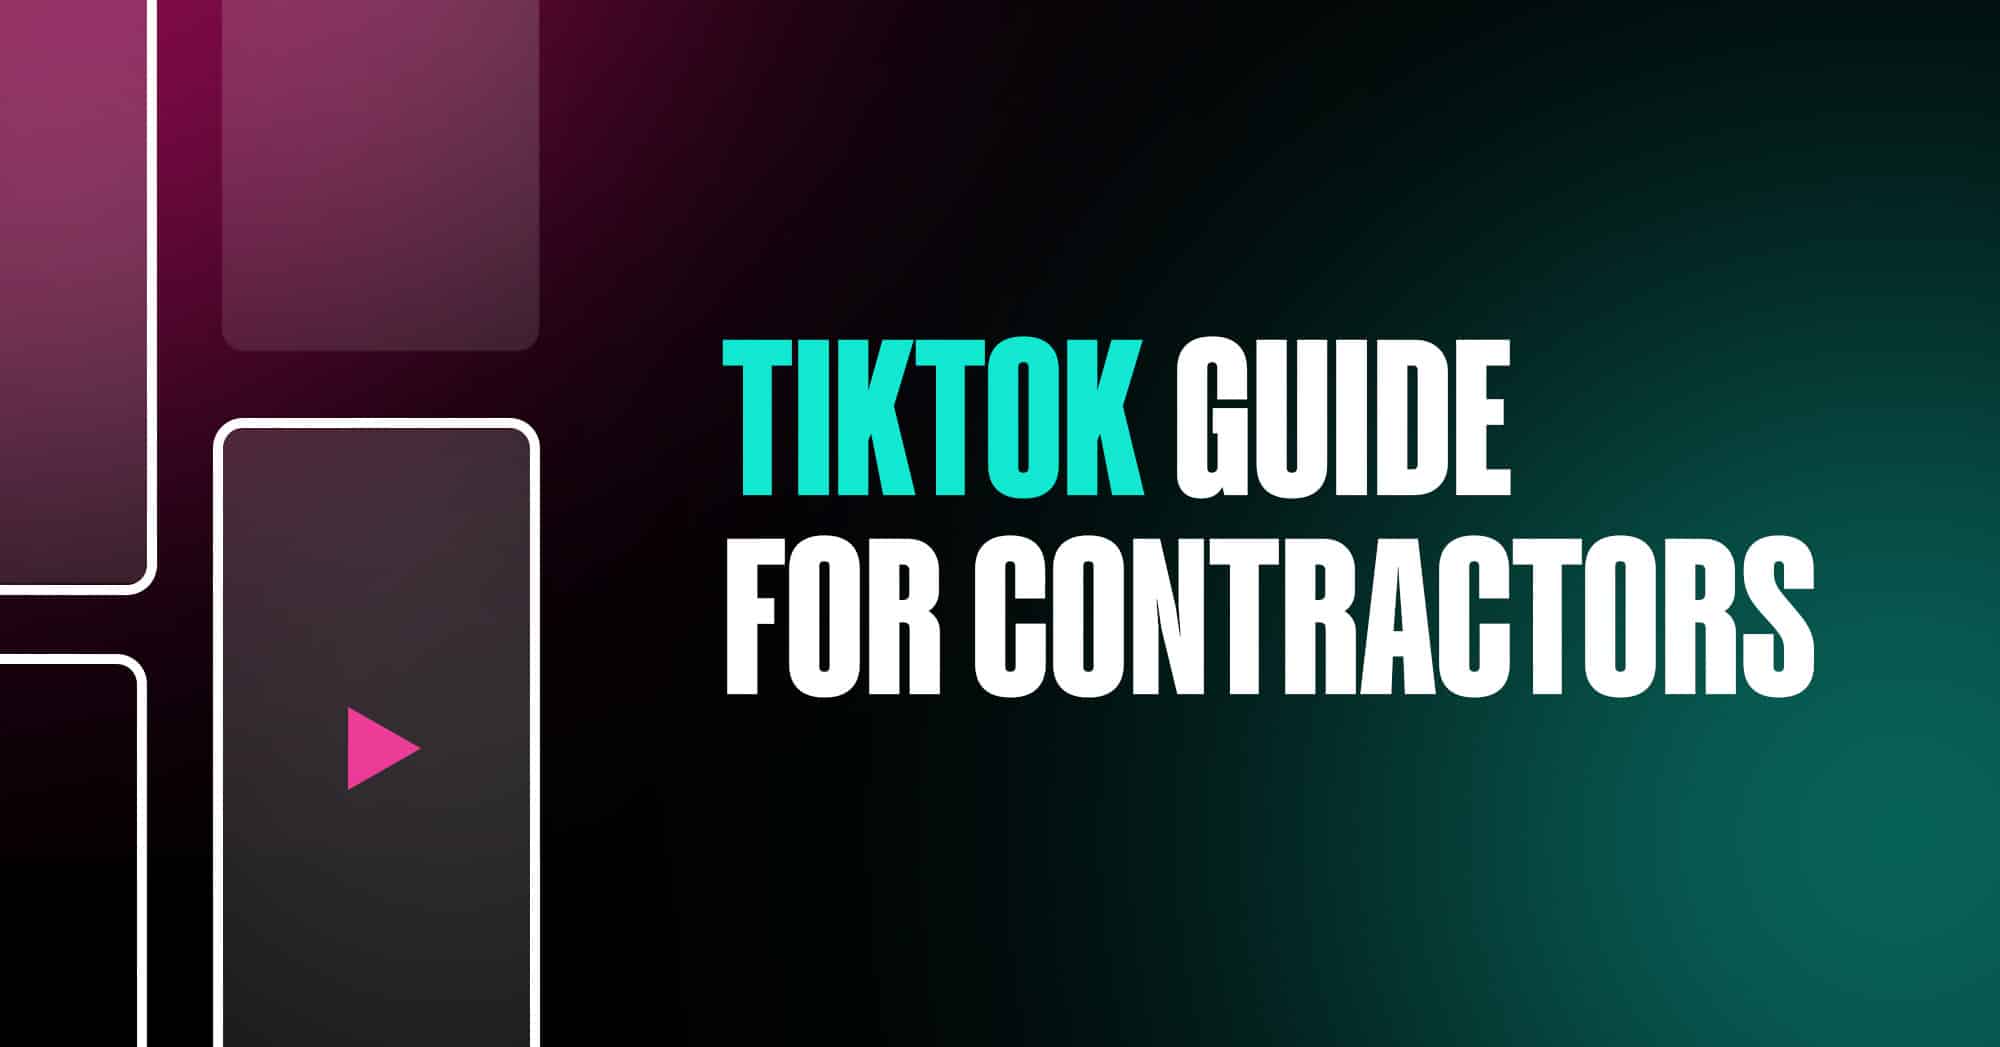 Tiktok guide for contractors blog image